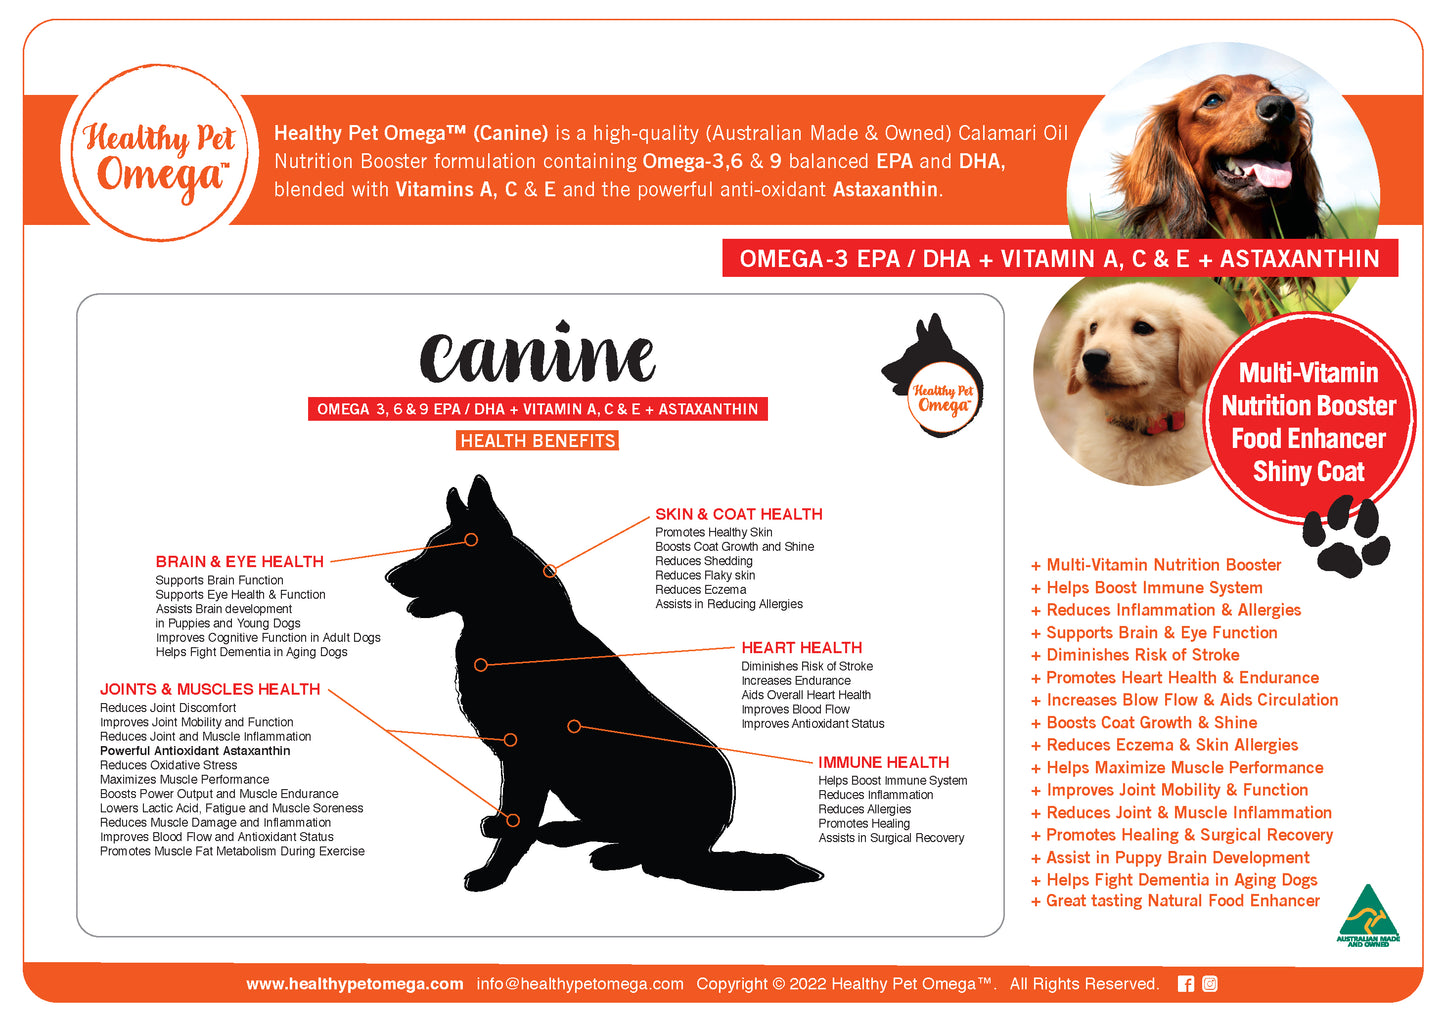 Healthy Pet Omega (Canine 250ml)